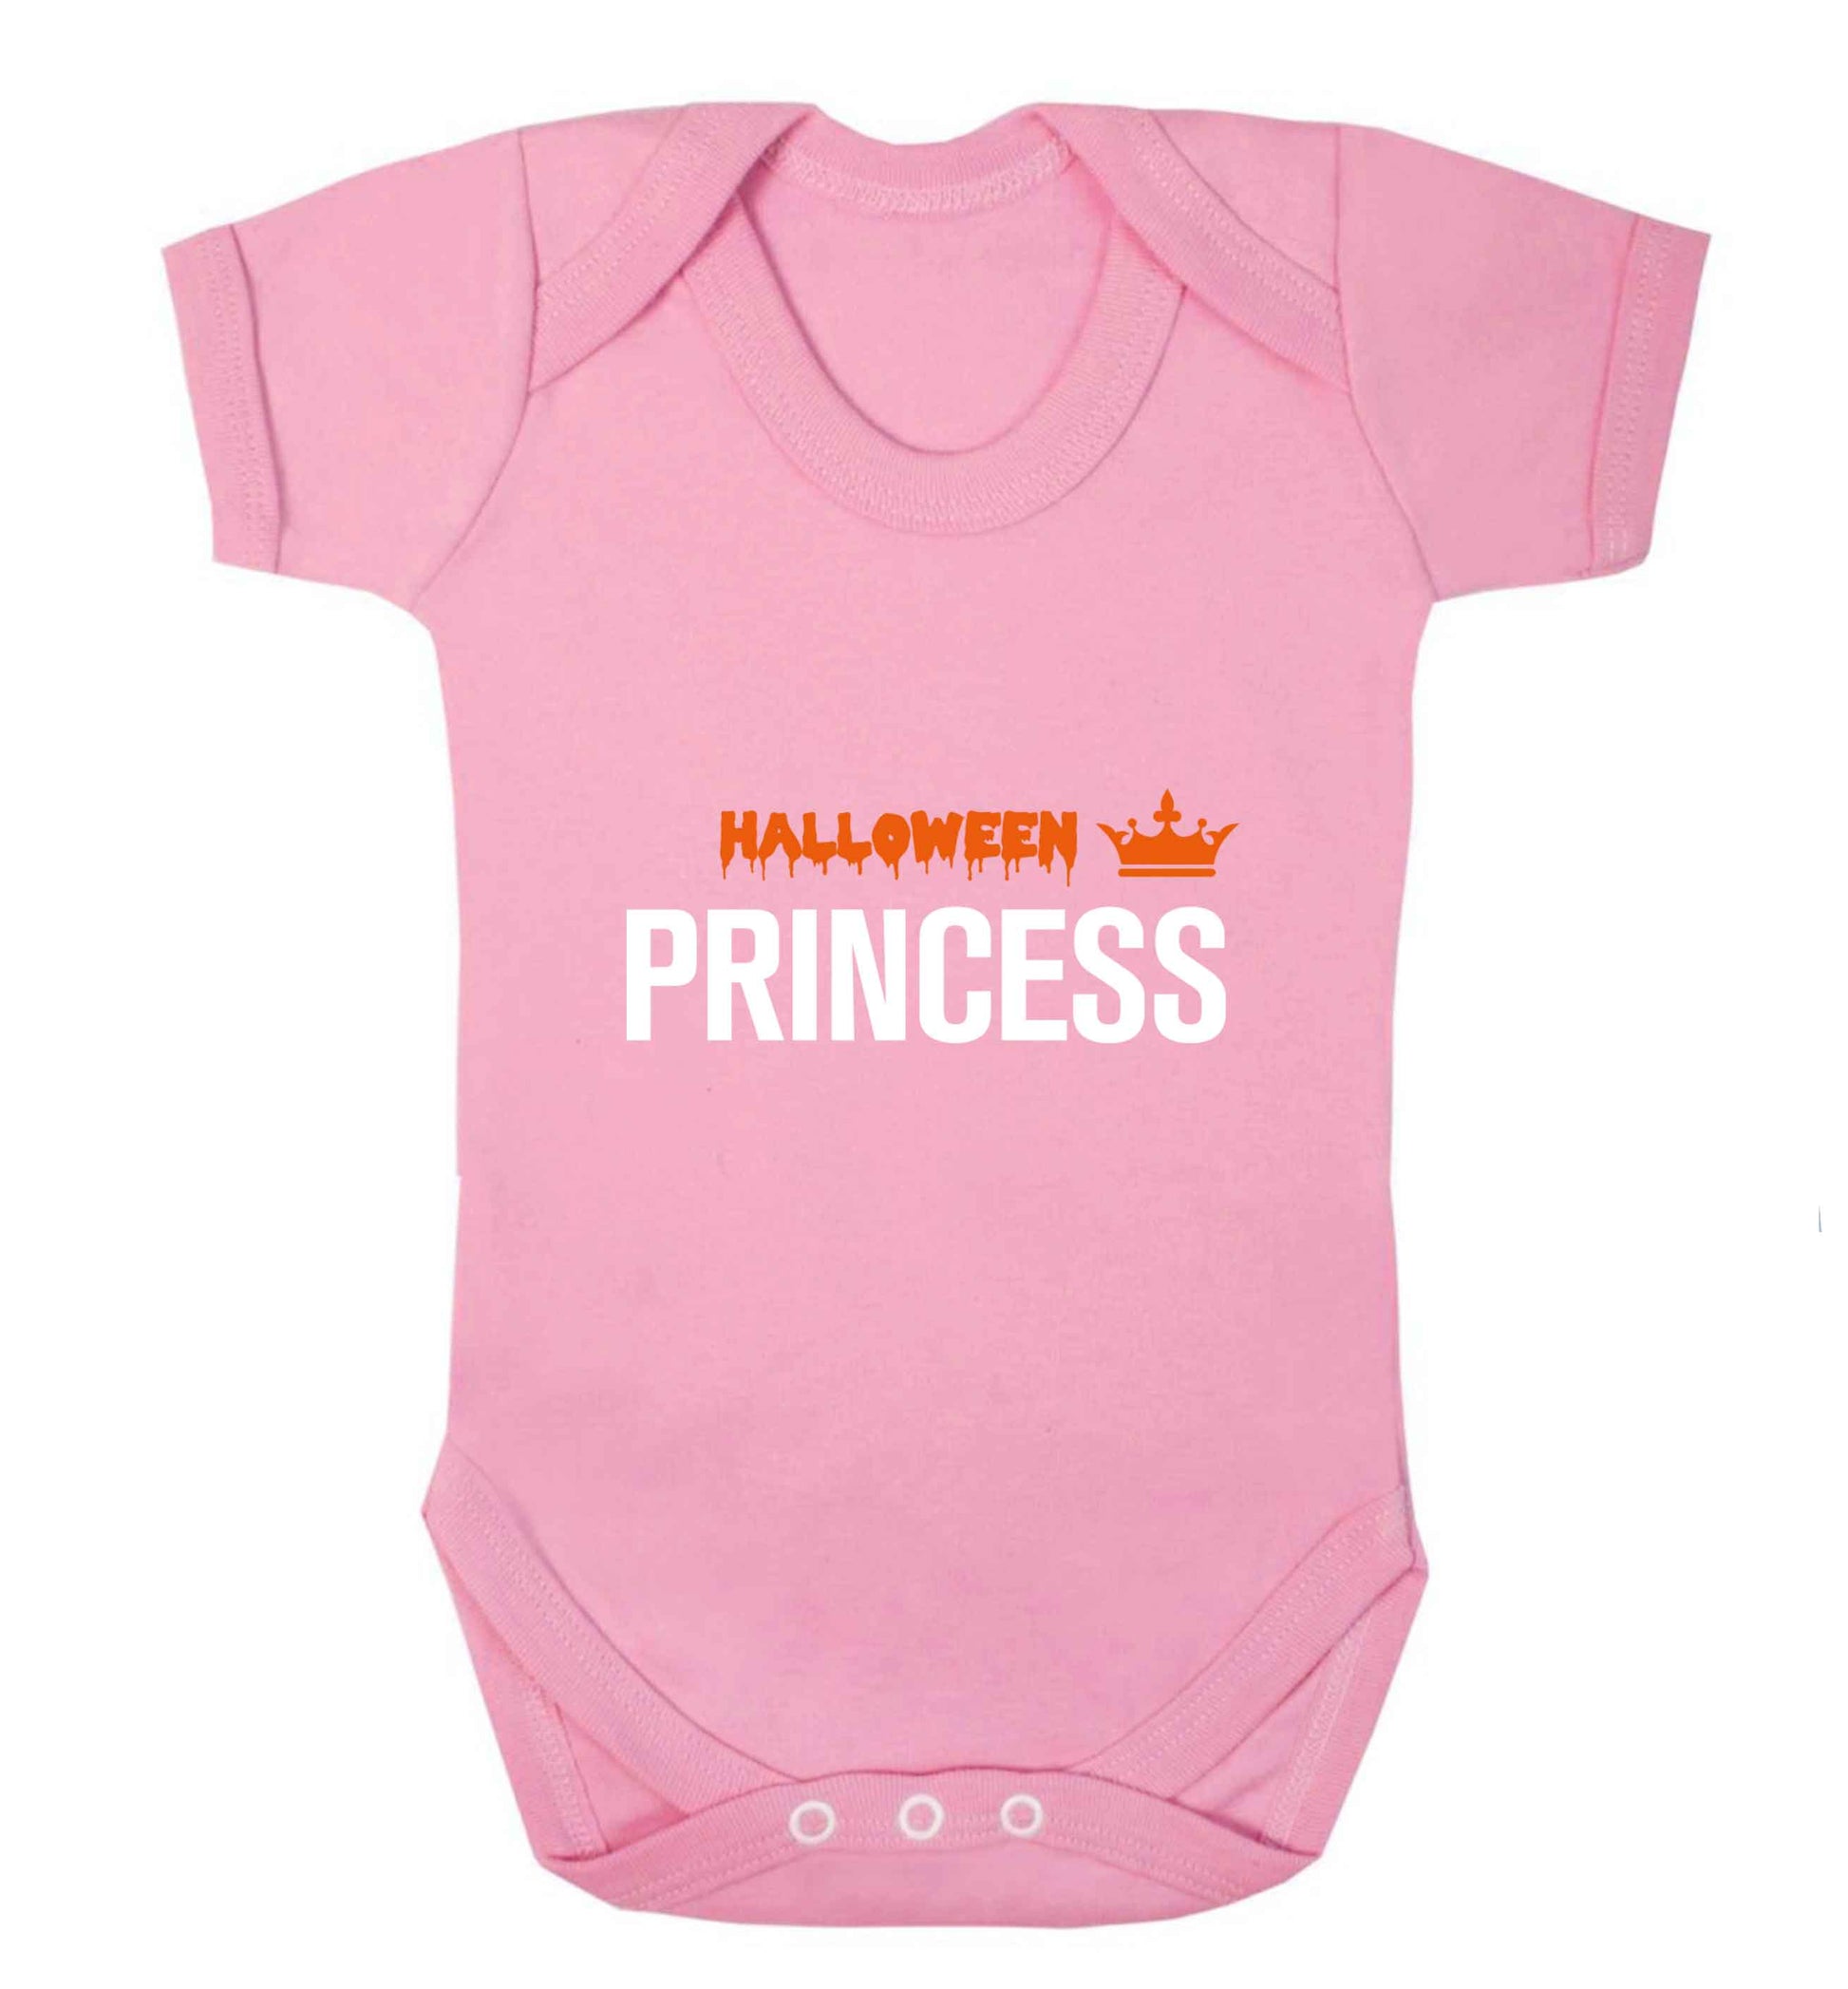 Halloween princess baby vest pale pink 18-24 months